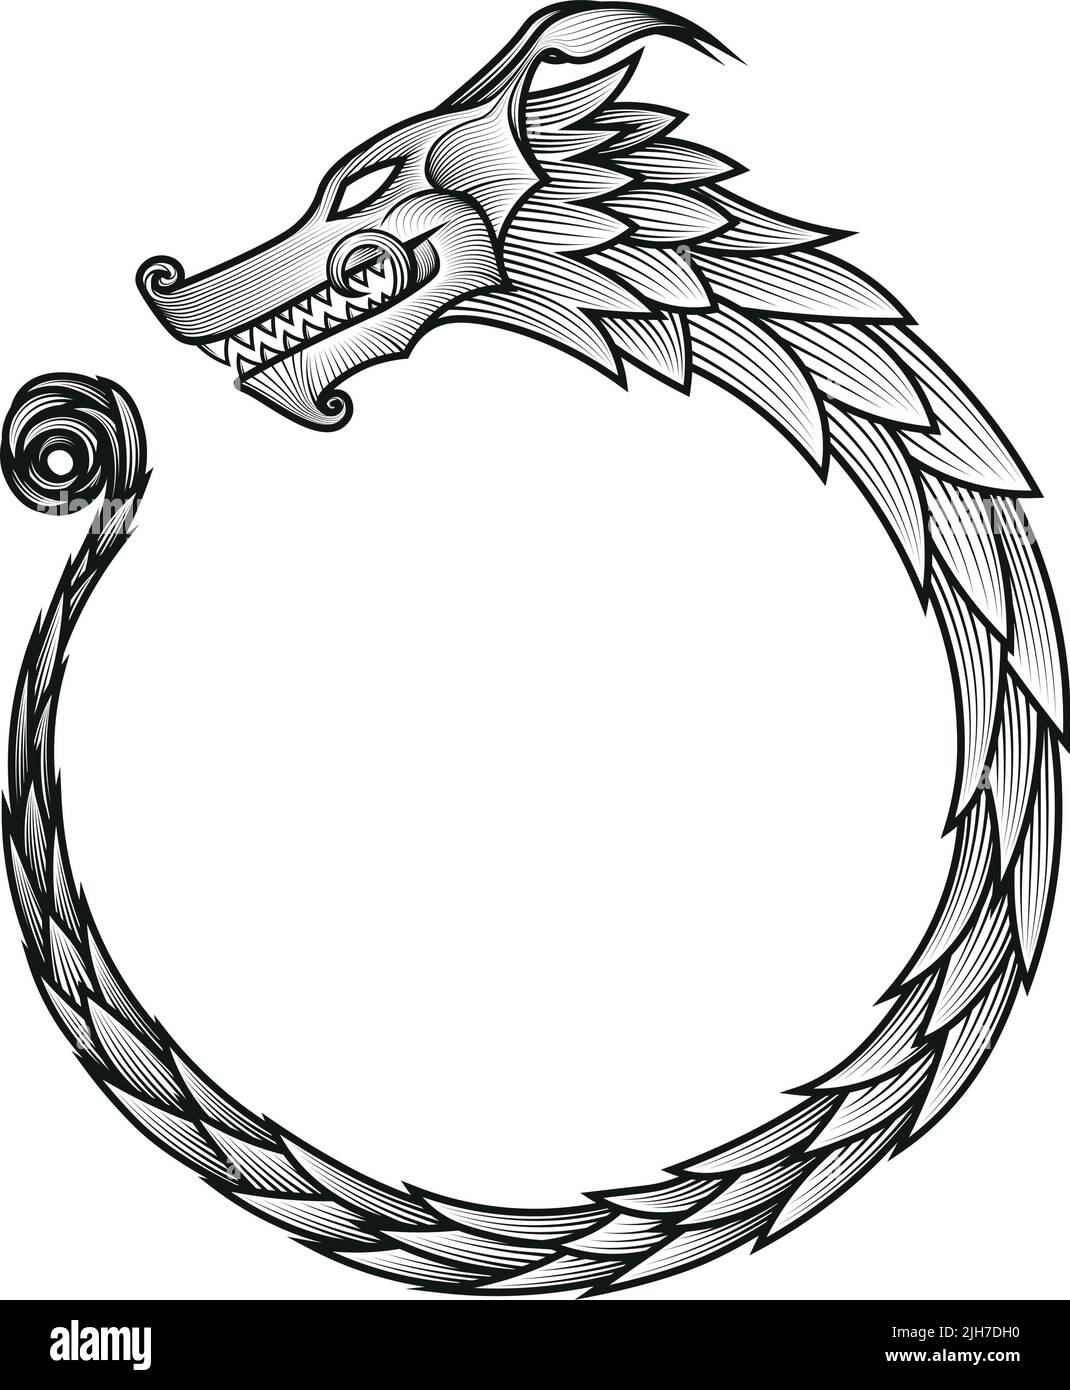 Ouroboros Infinity Symbol - Dragon viking medieval woodcut style Stock Vector